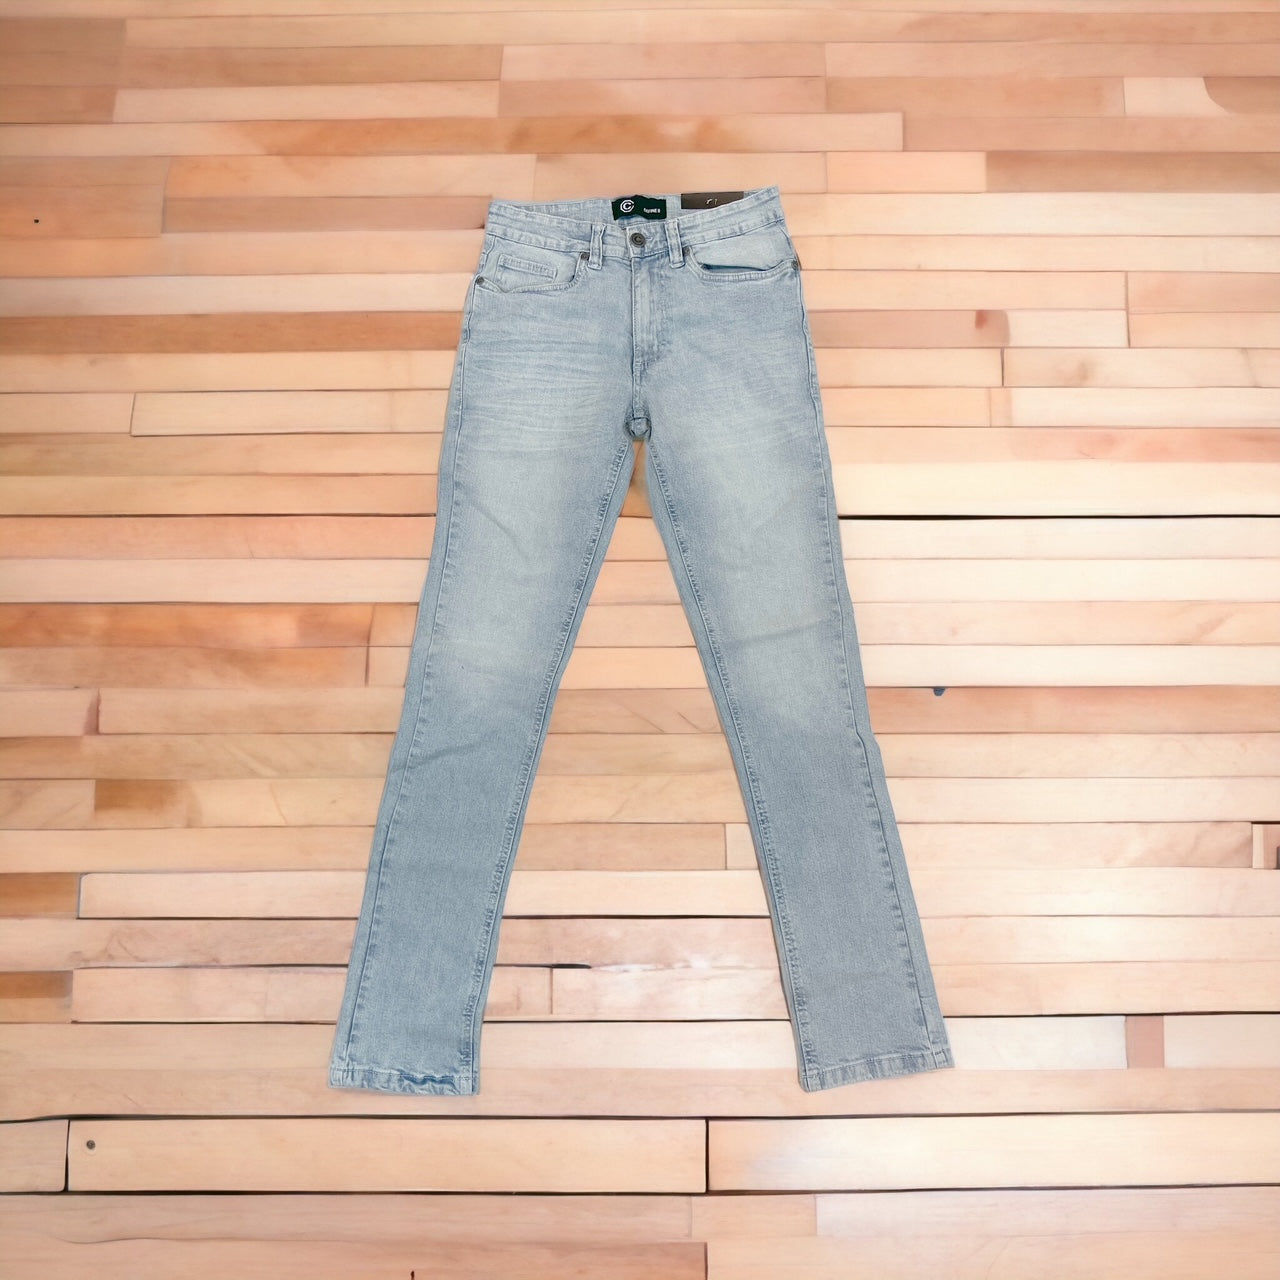 Define Denim Vancouver Freestyle Jeans Men's 32x33 Straight Leg | eBay